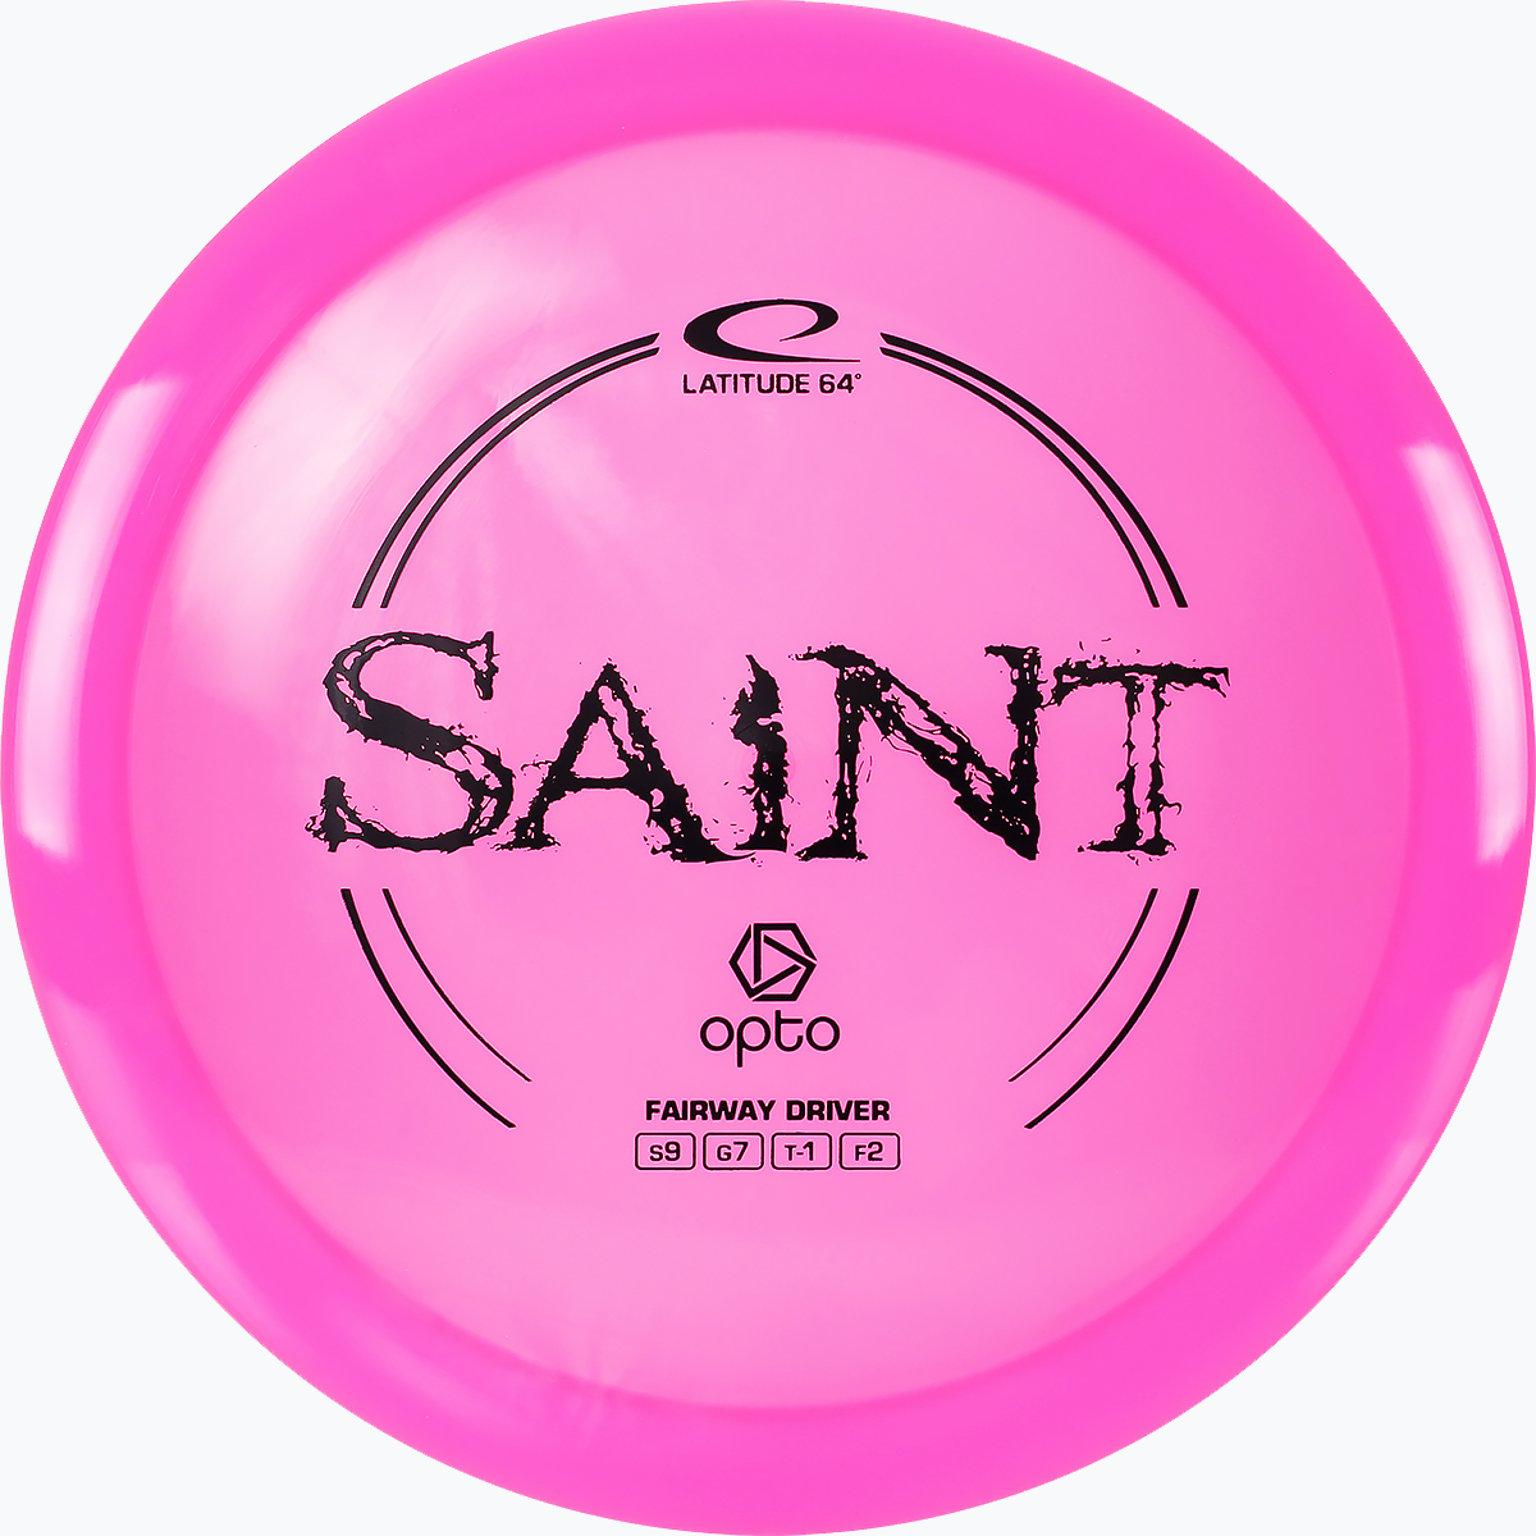 Opto Saint fairway driver disc